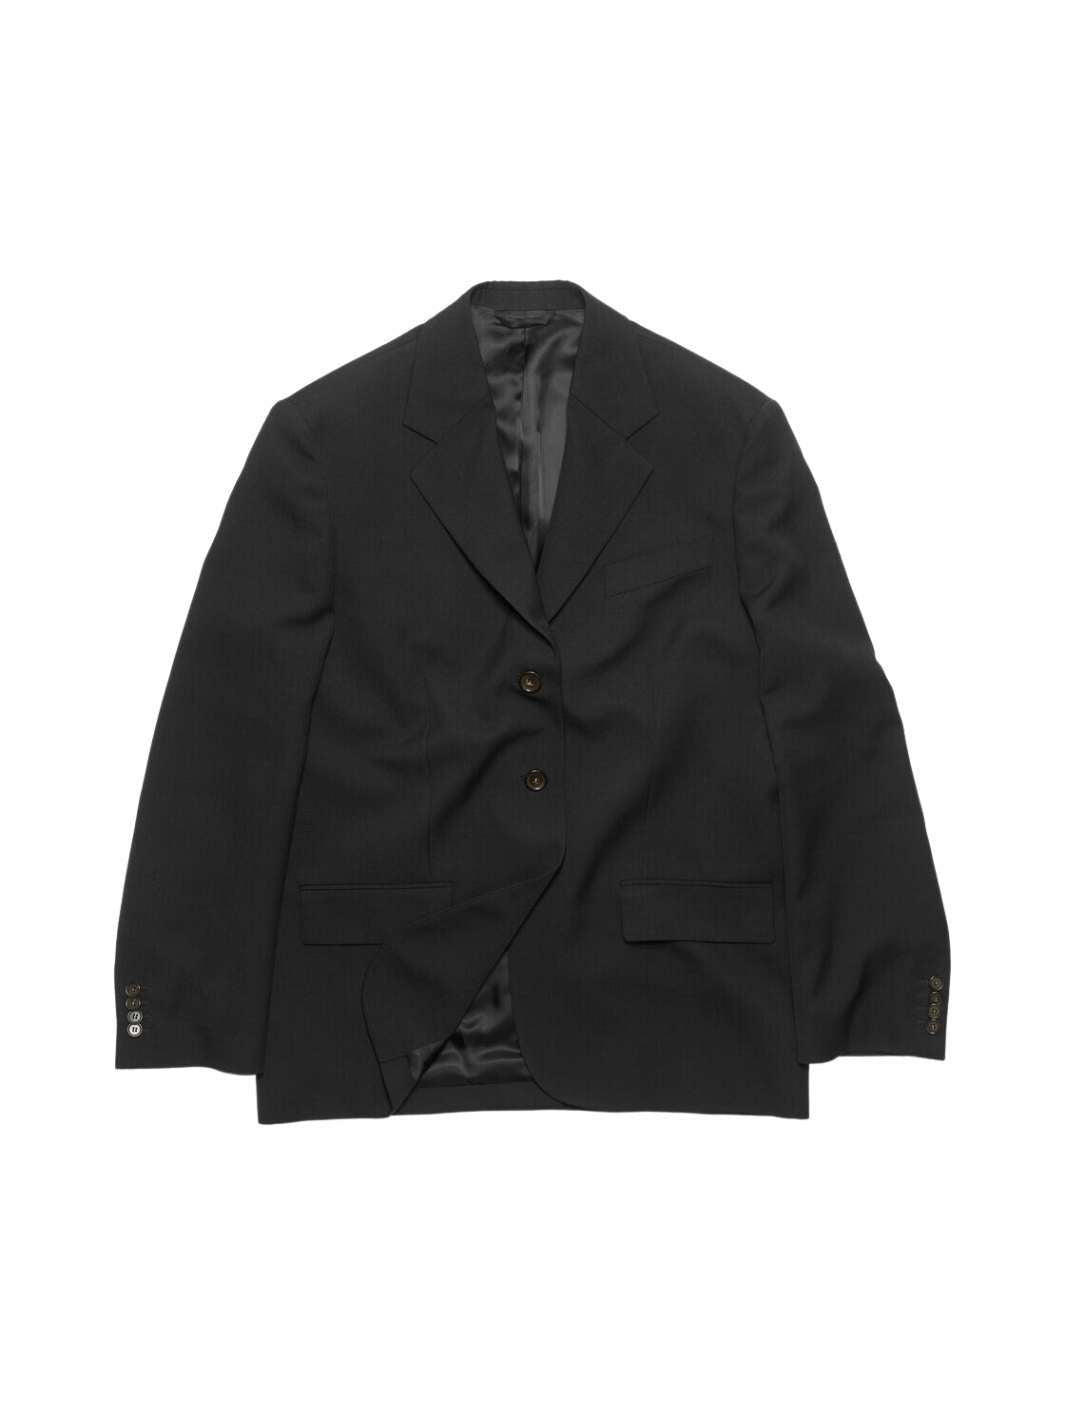 Acne Studios Suit Jackets Blazer | Single-breasted Suit Jacket